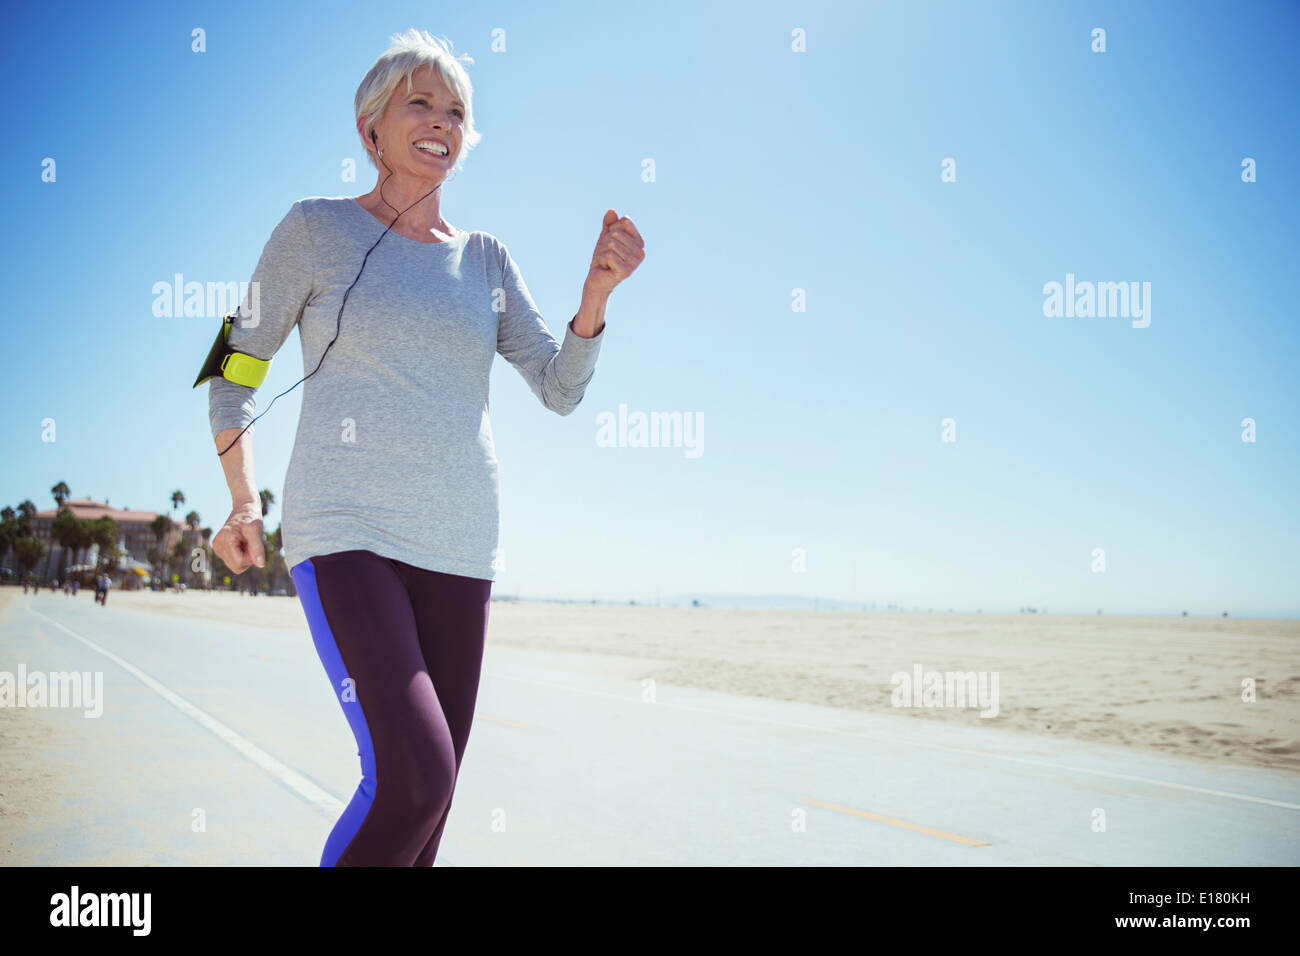 Senior woman jogging on beach boardwalk Stock Photo